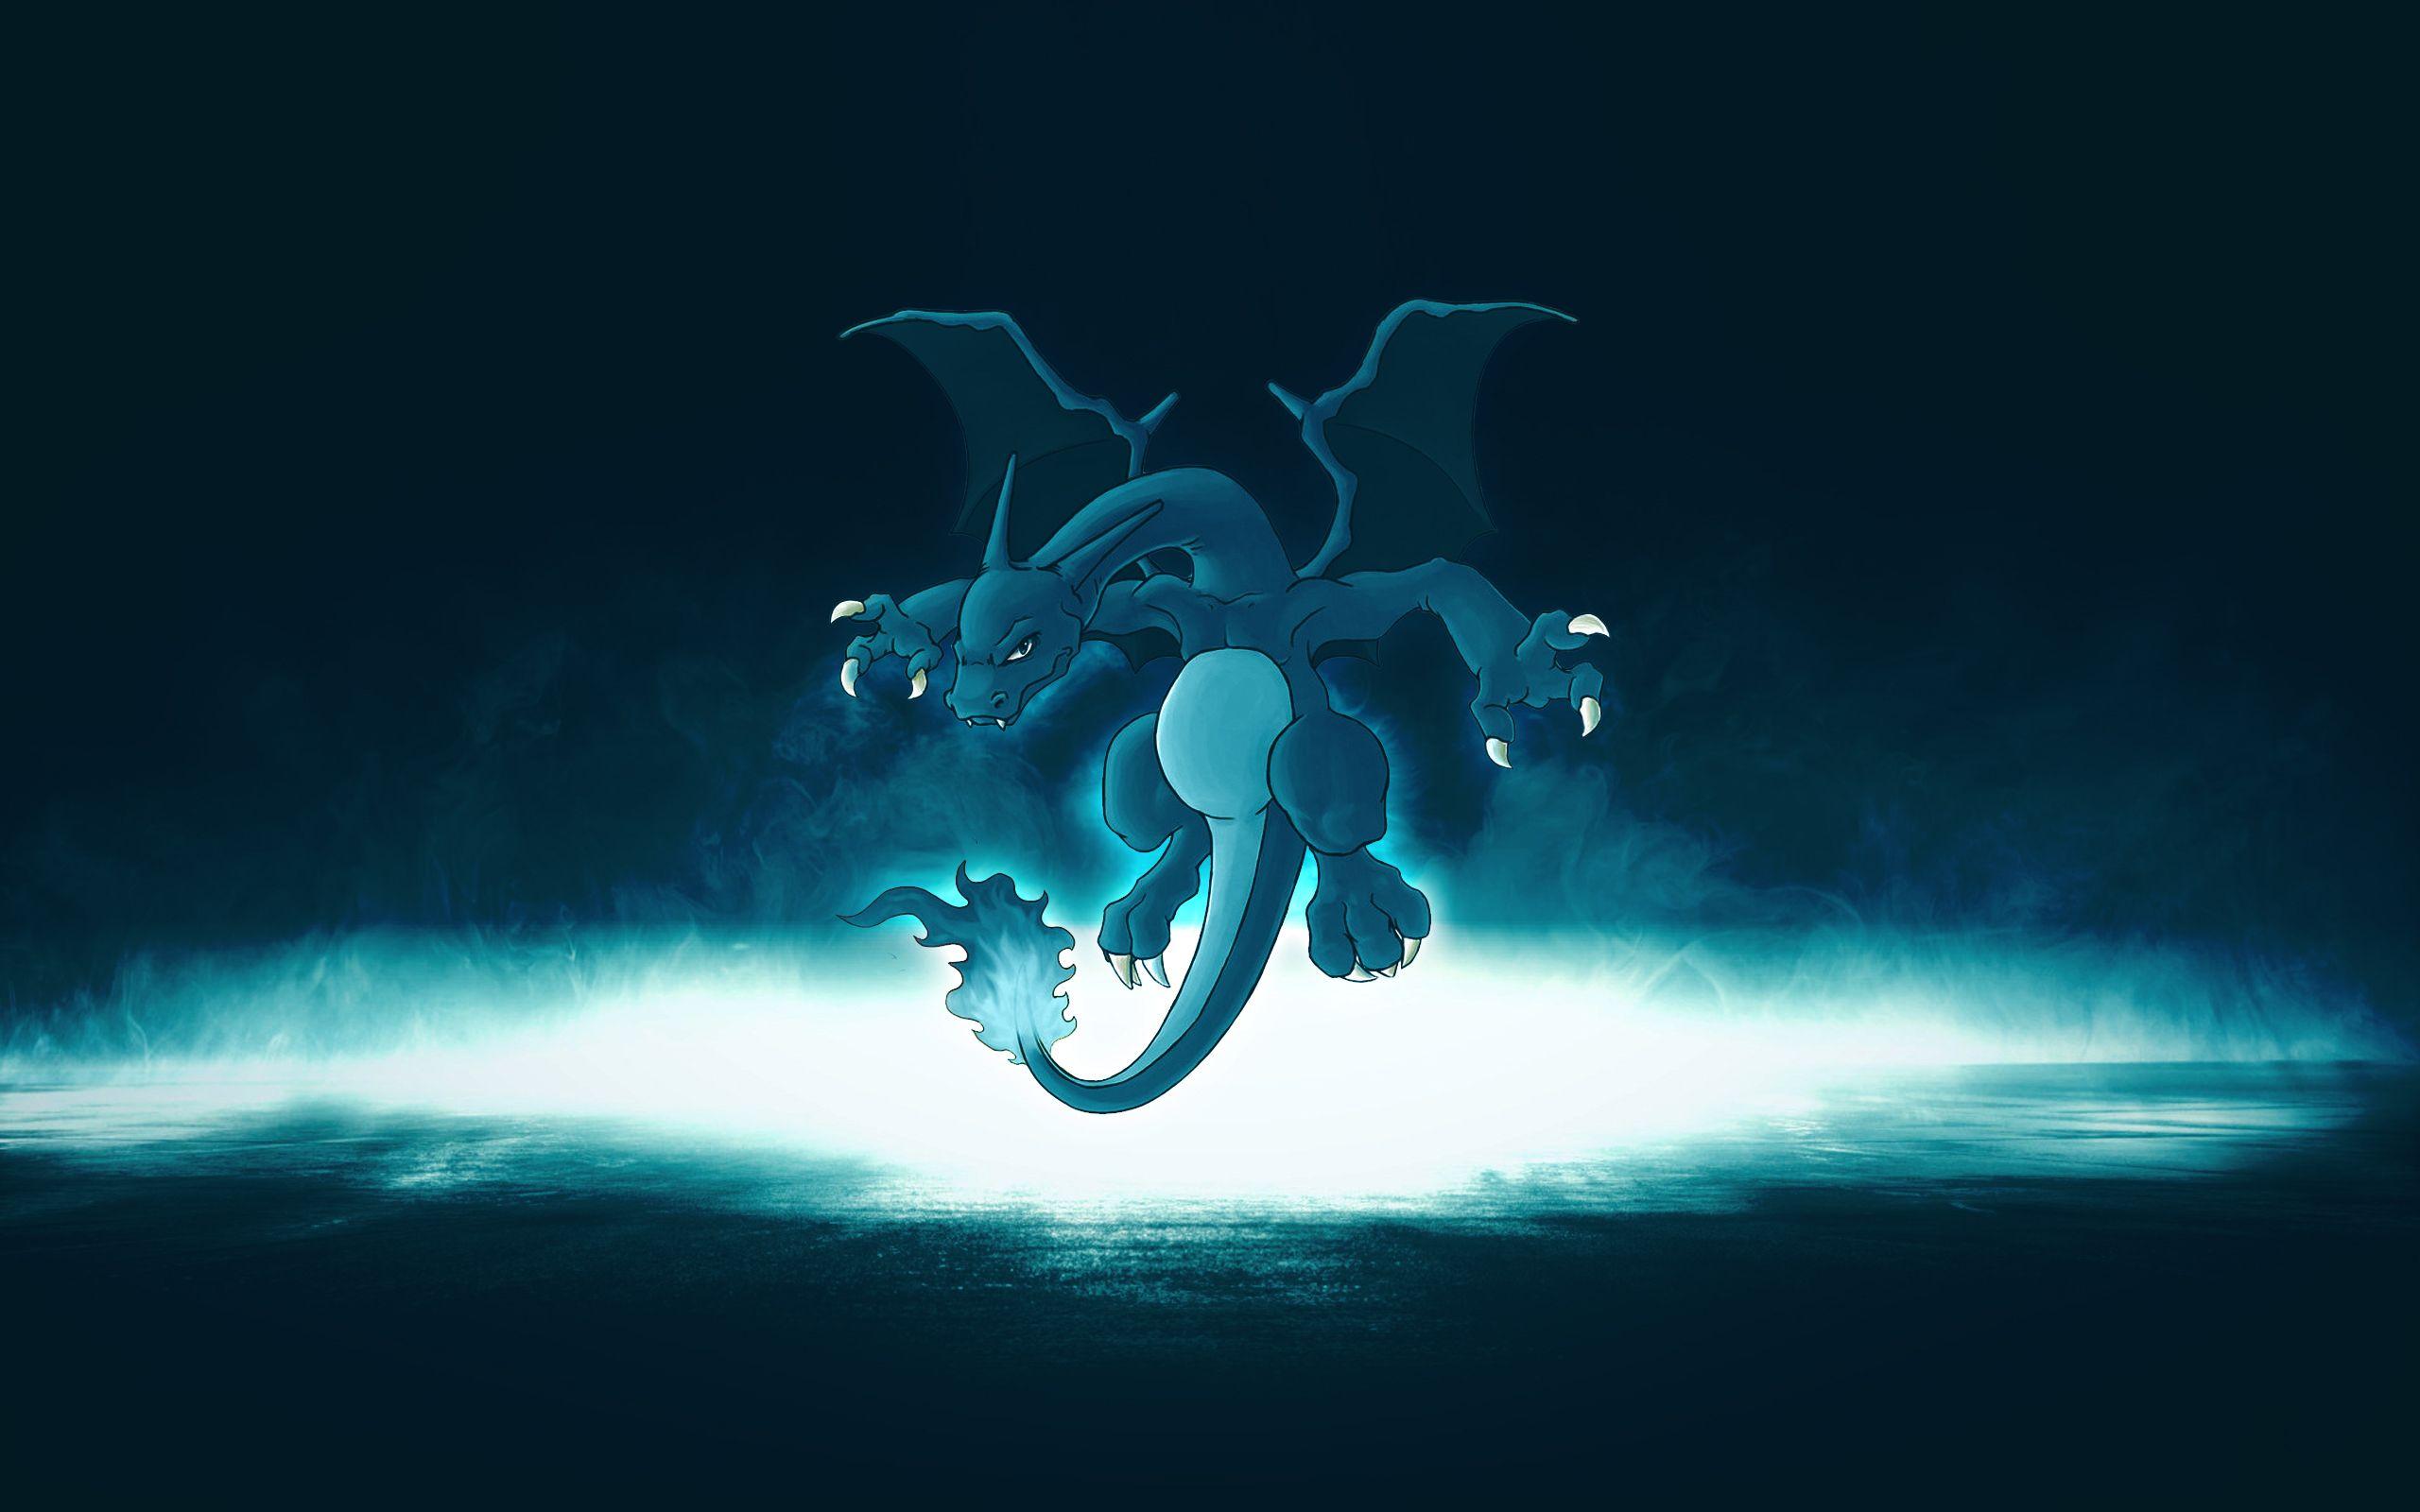 Charizard (Pokémon) HD Wallpaper and Background